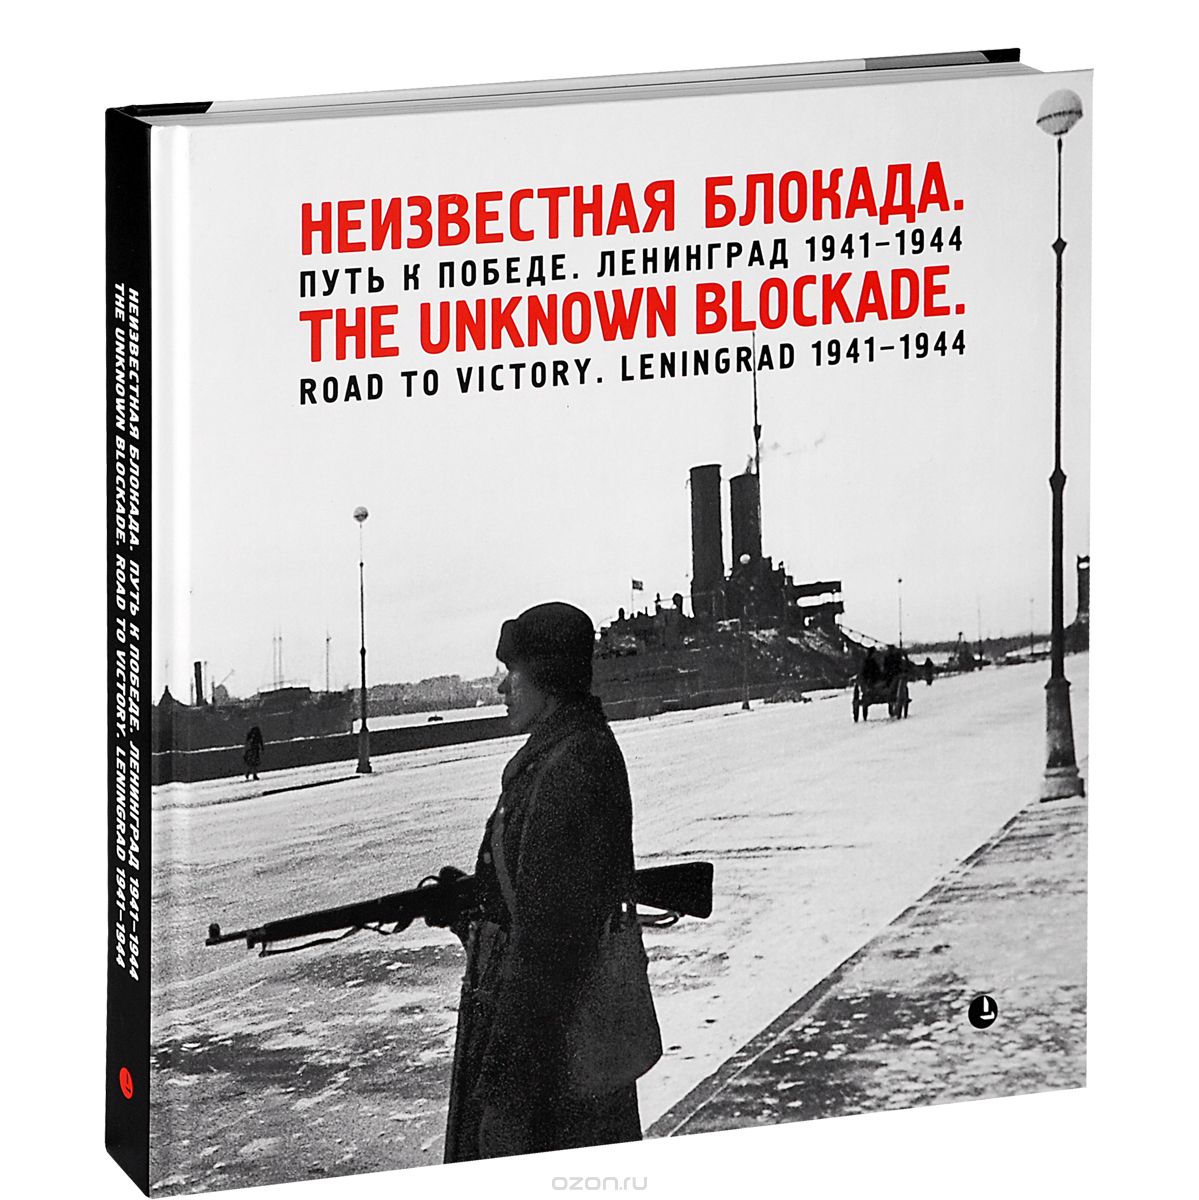 Скачать книгу "Неизвестная блокада. Путь к победе. Ленинград 1941-1944 / The Unknown Blockade: Road to Victory: Leningrad 1941-1944"